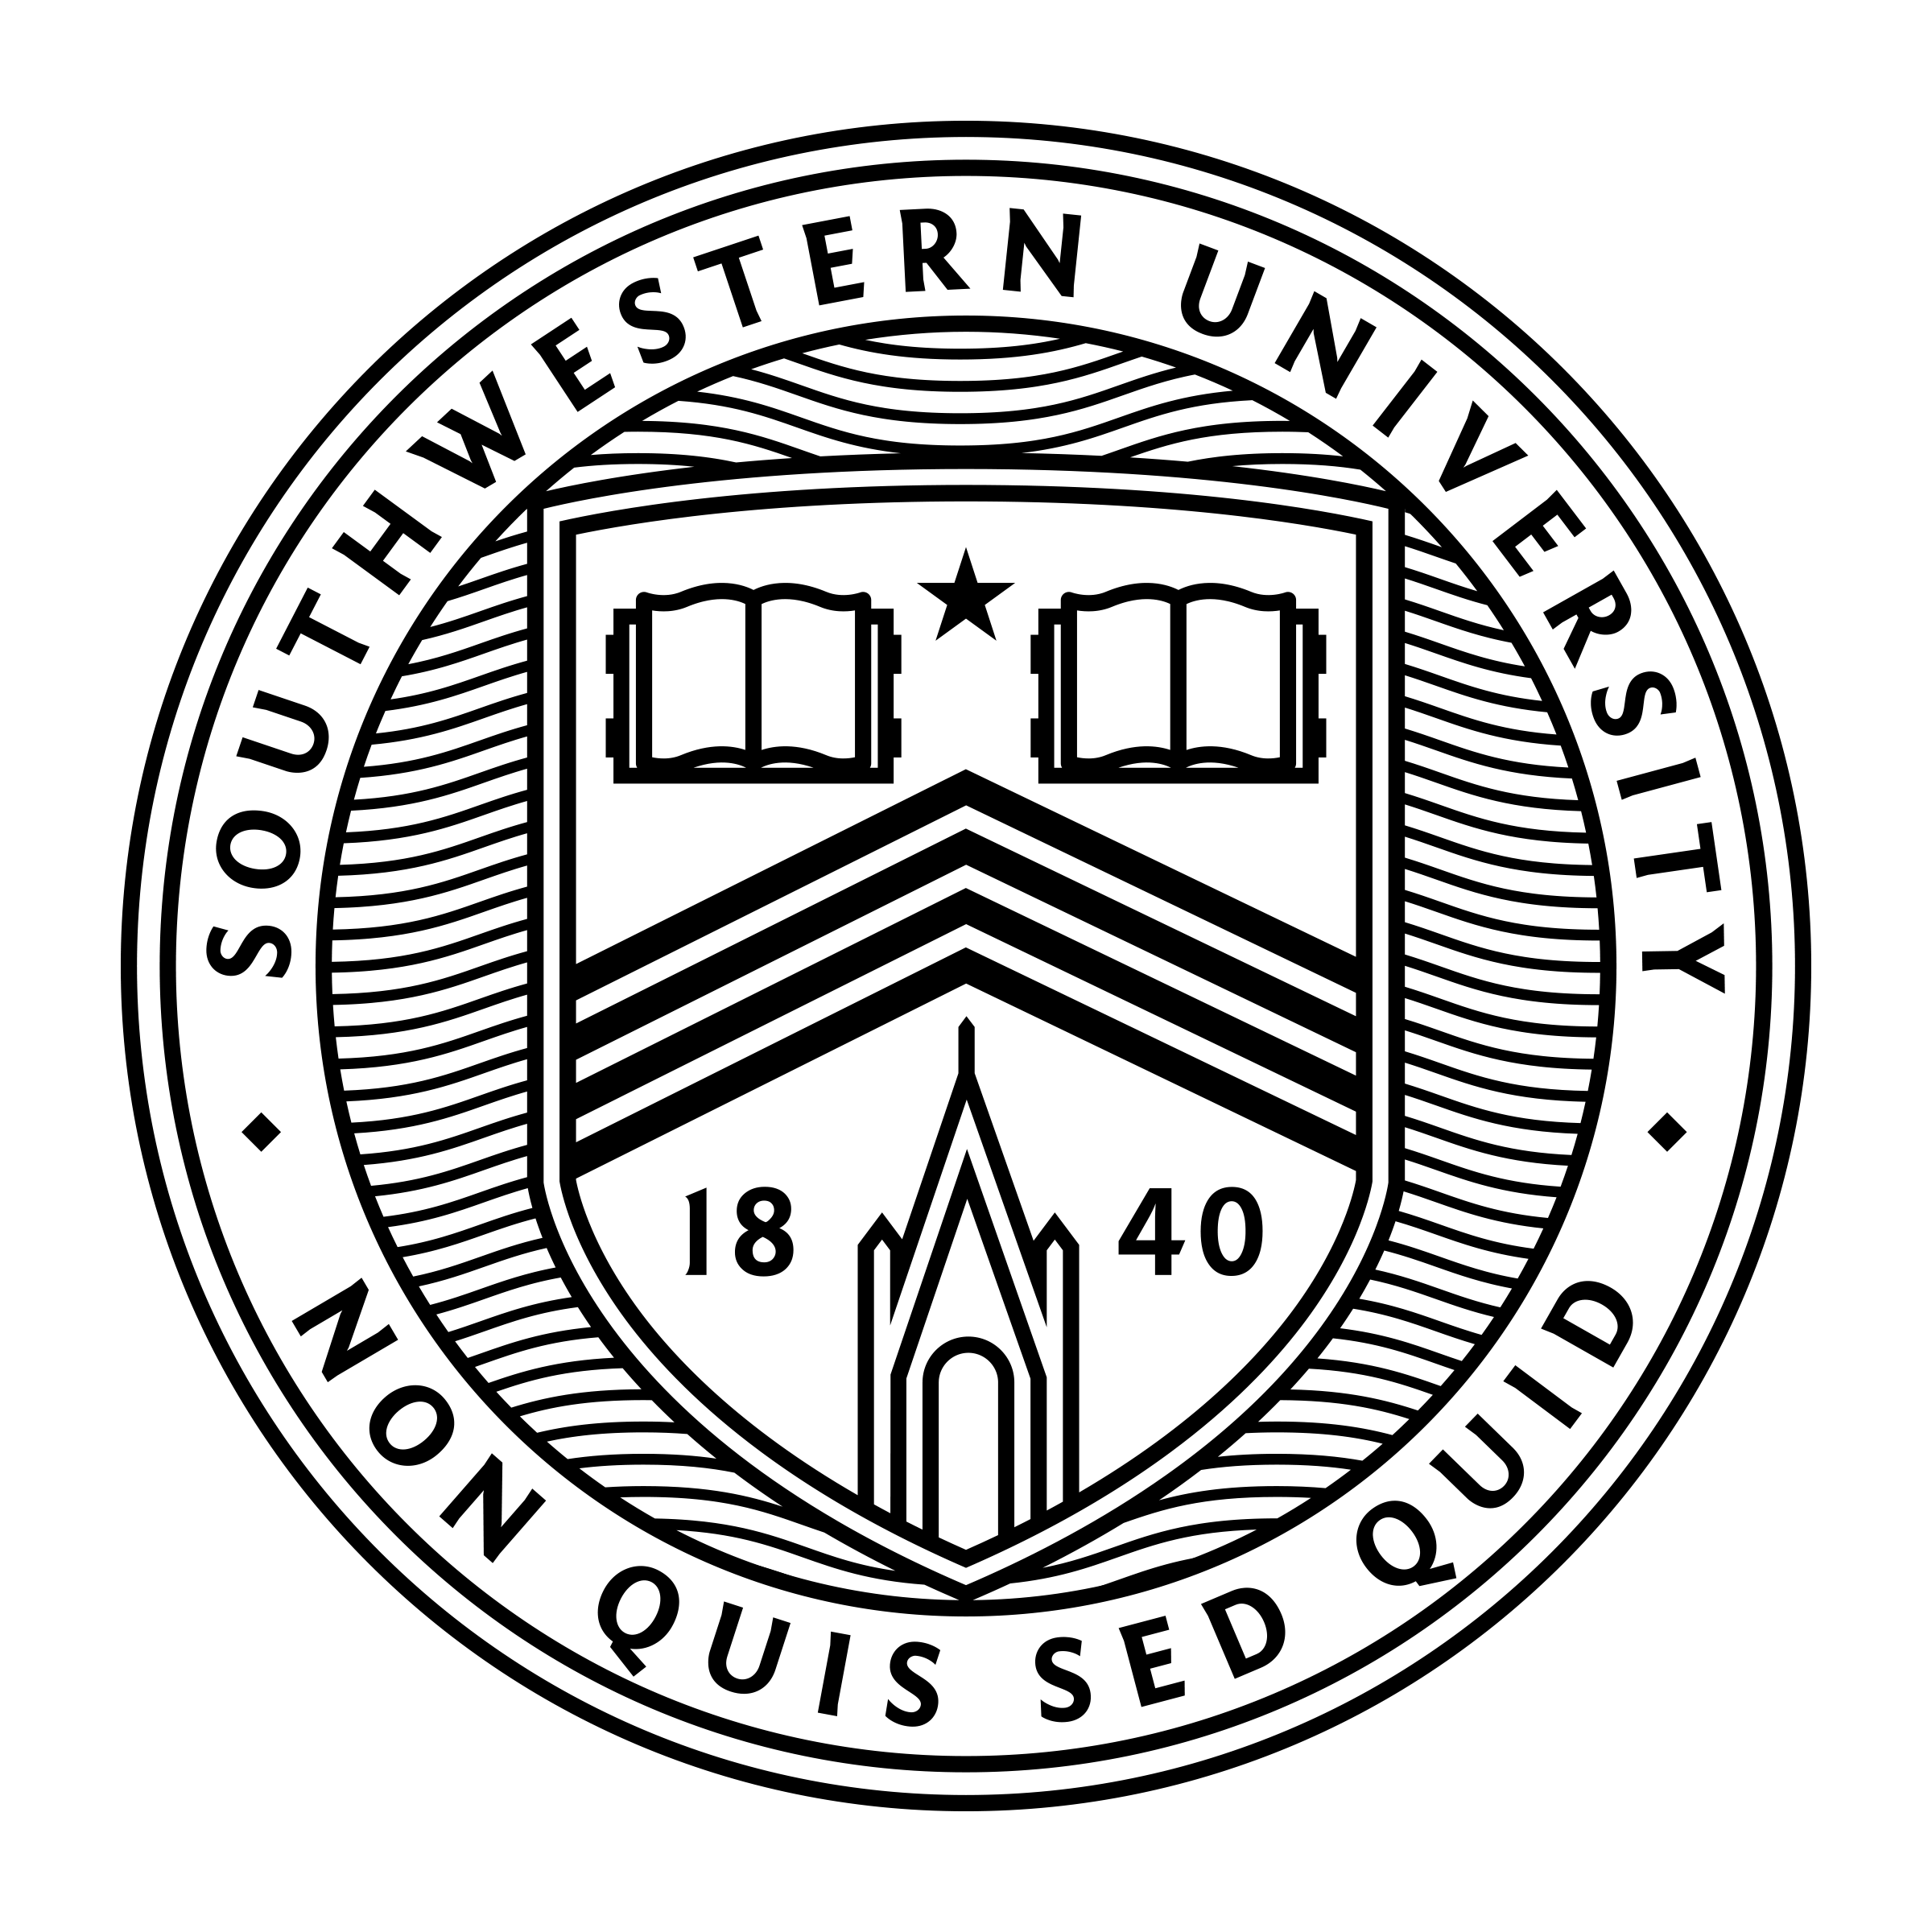 Southwestern Logo - Identity • Southwestern University